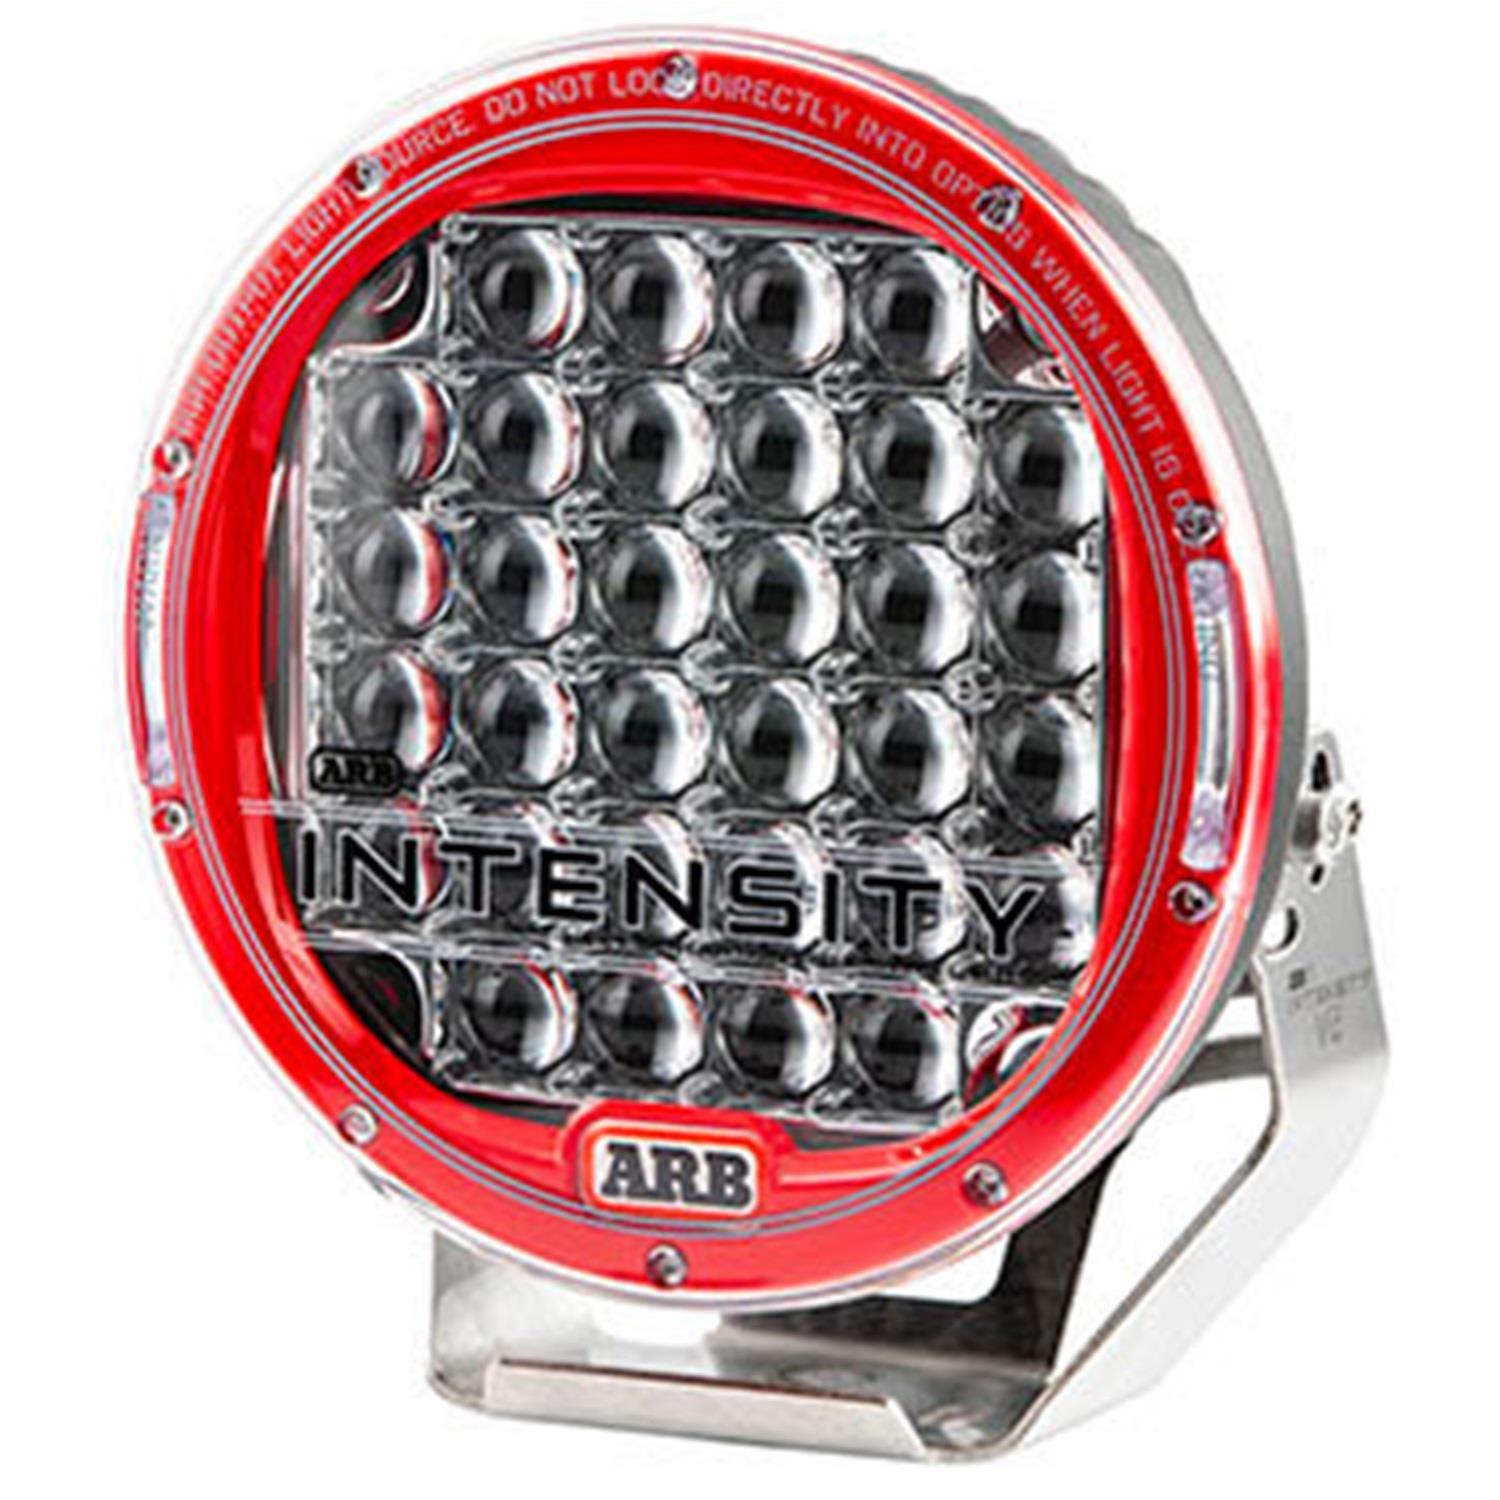 ARB Intensity V2 LED Driving Lights - Spot Beam - Click Image to Close